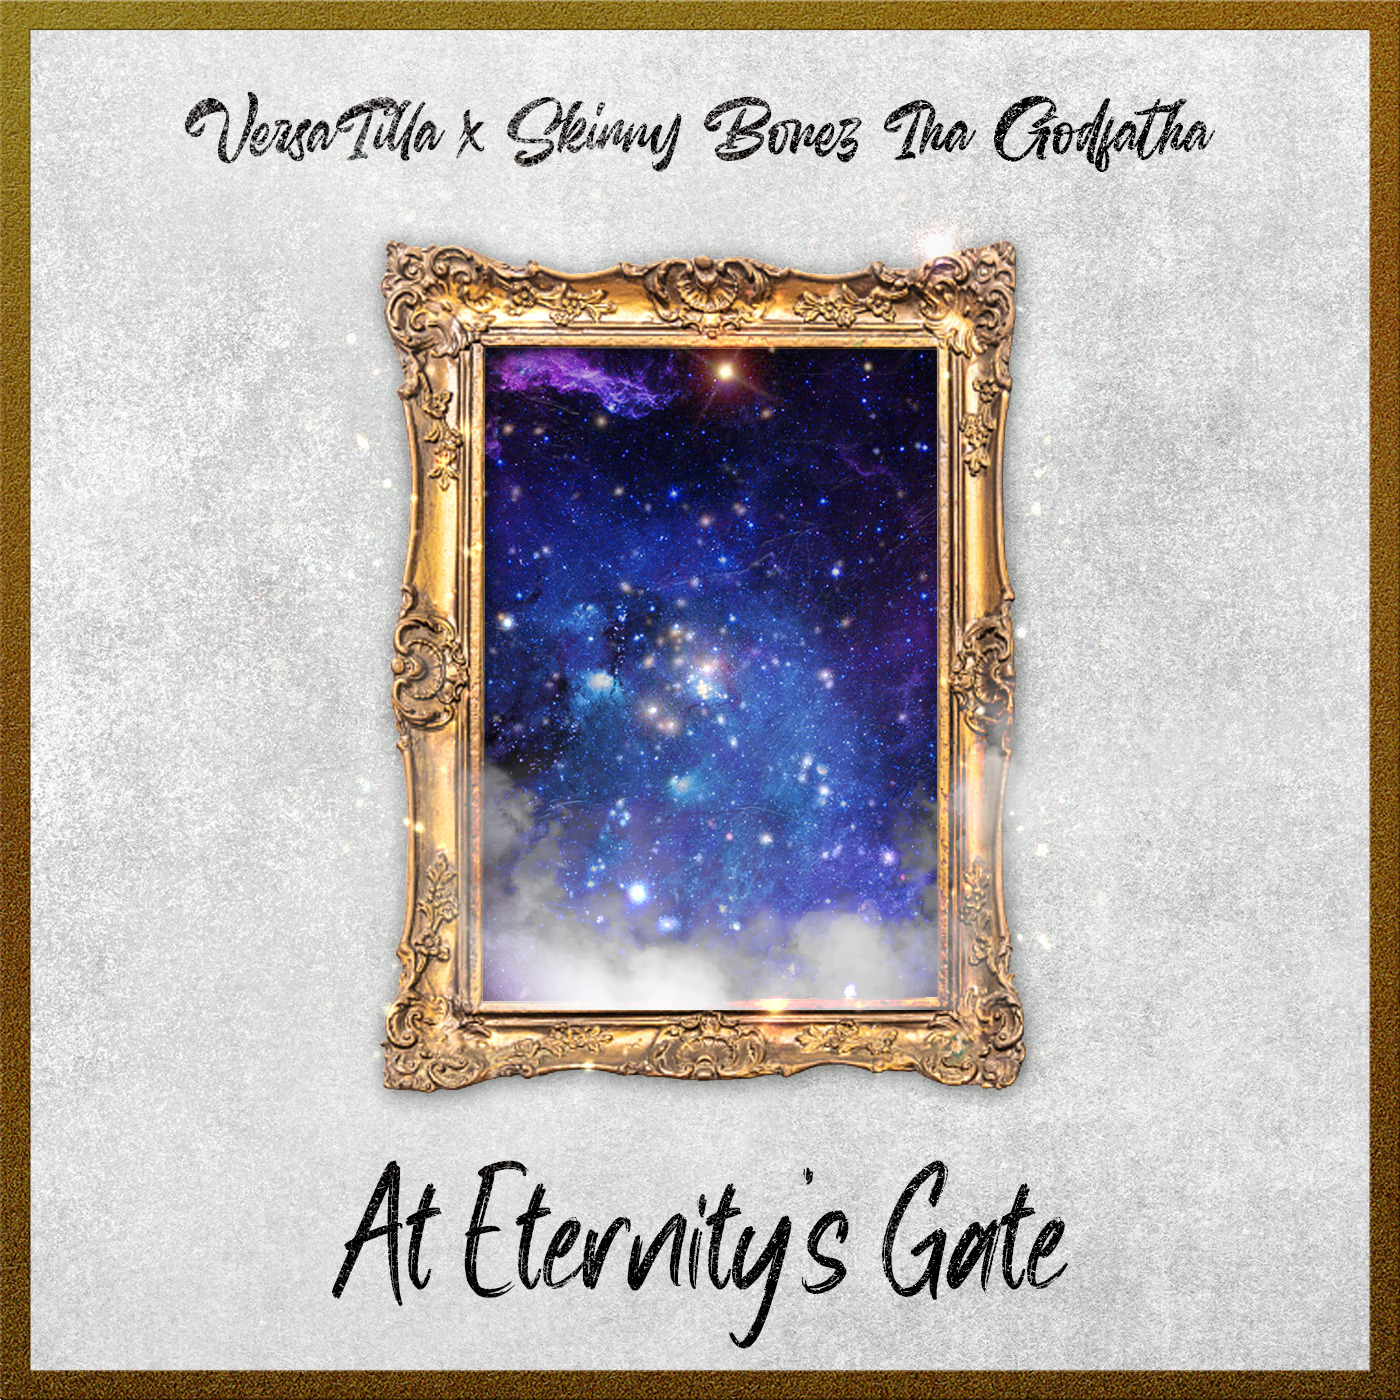 VersaTilla & Skinny Bonez Tha Godfatha Drop 'At Eternity's Gate' EP